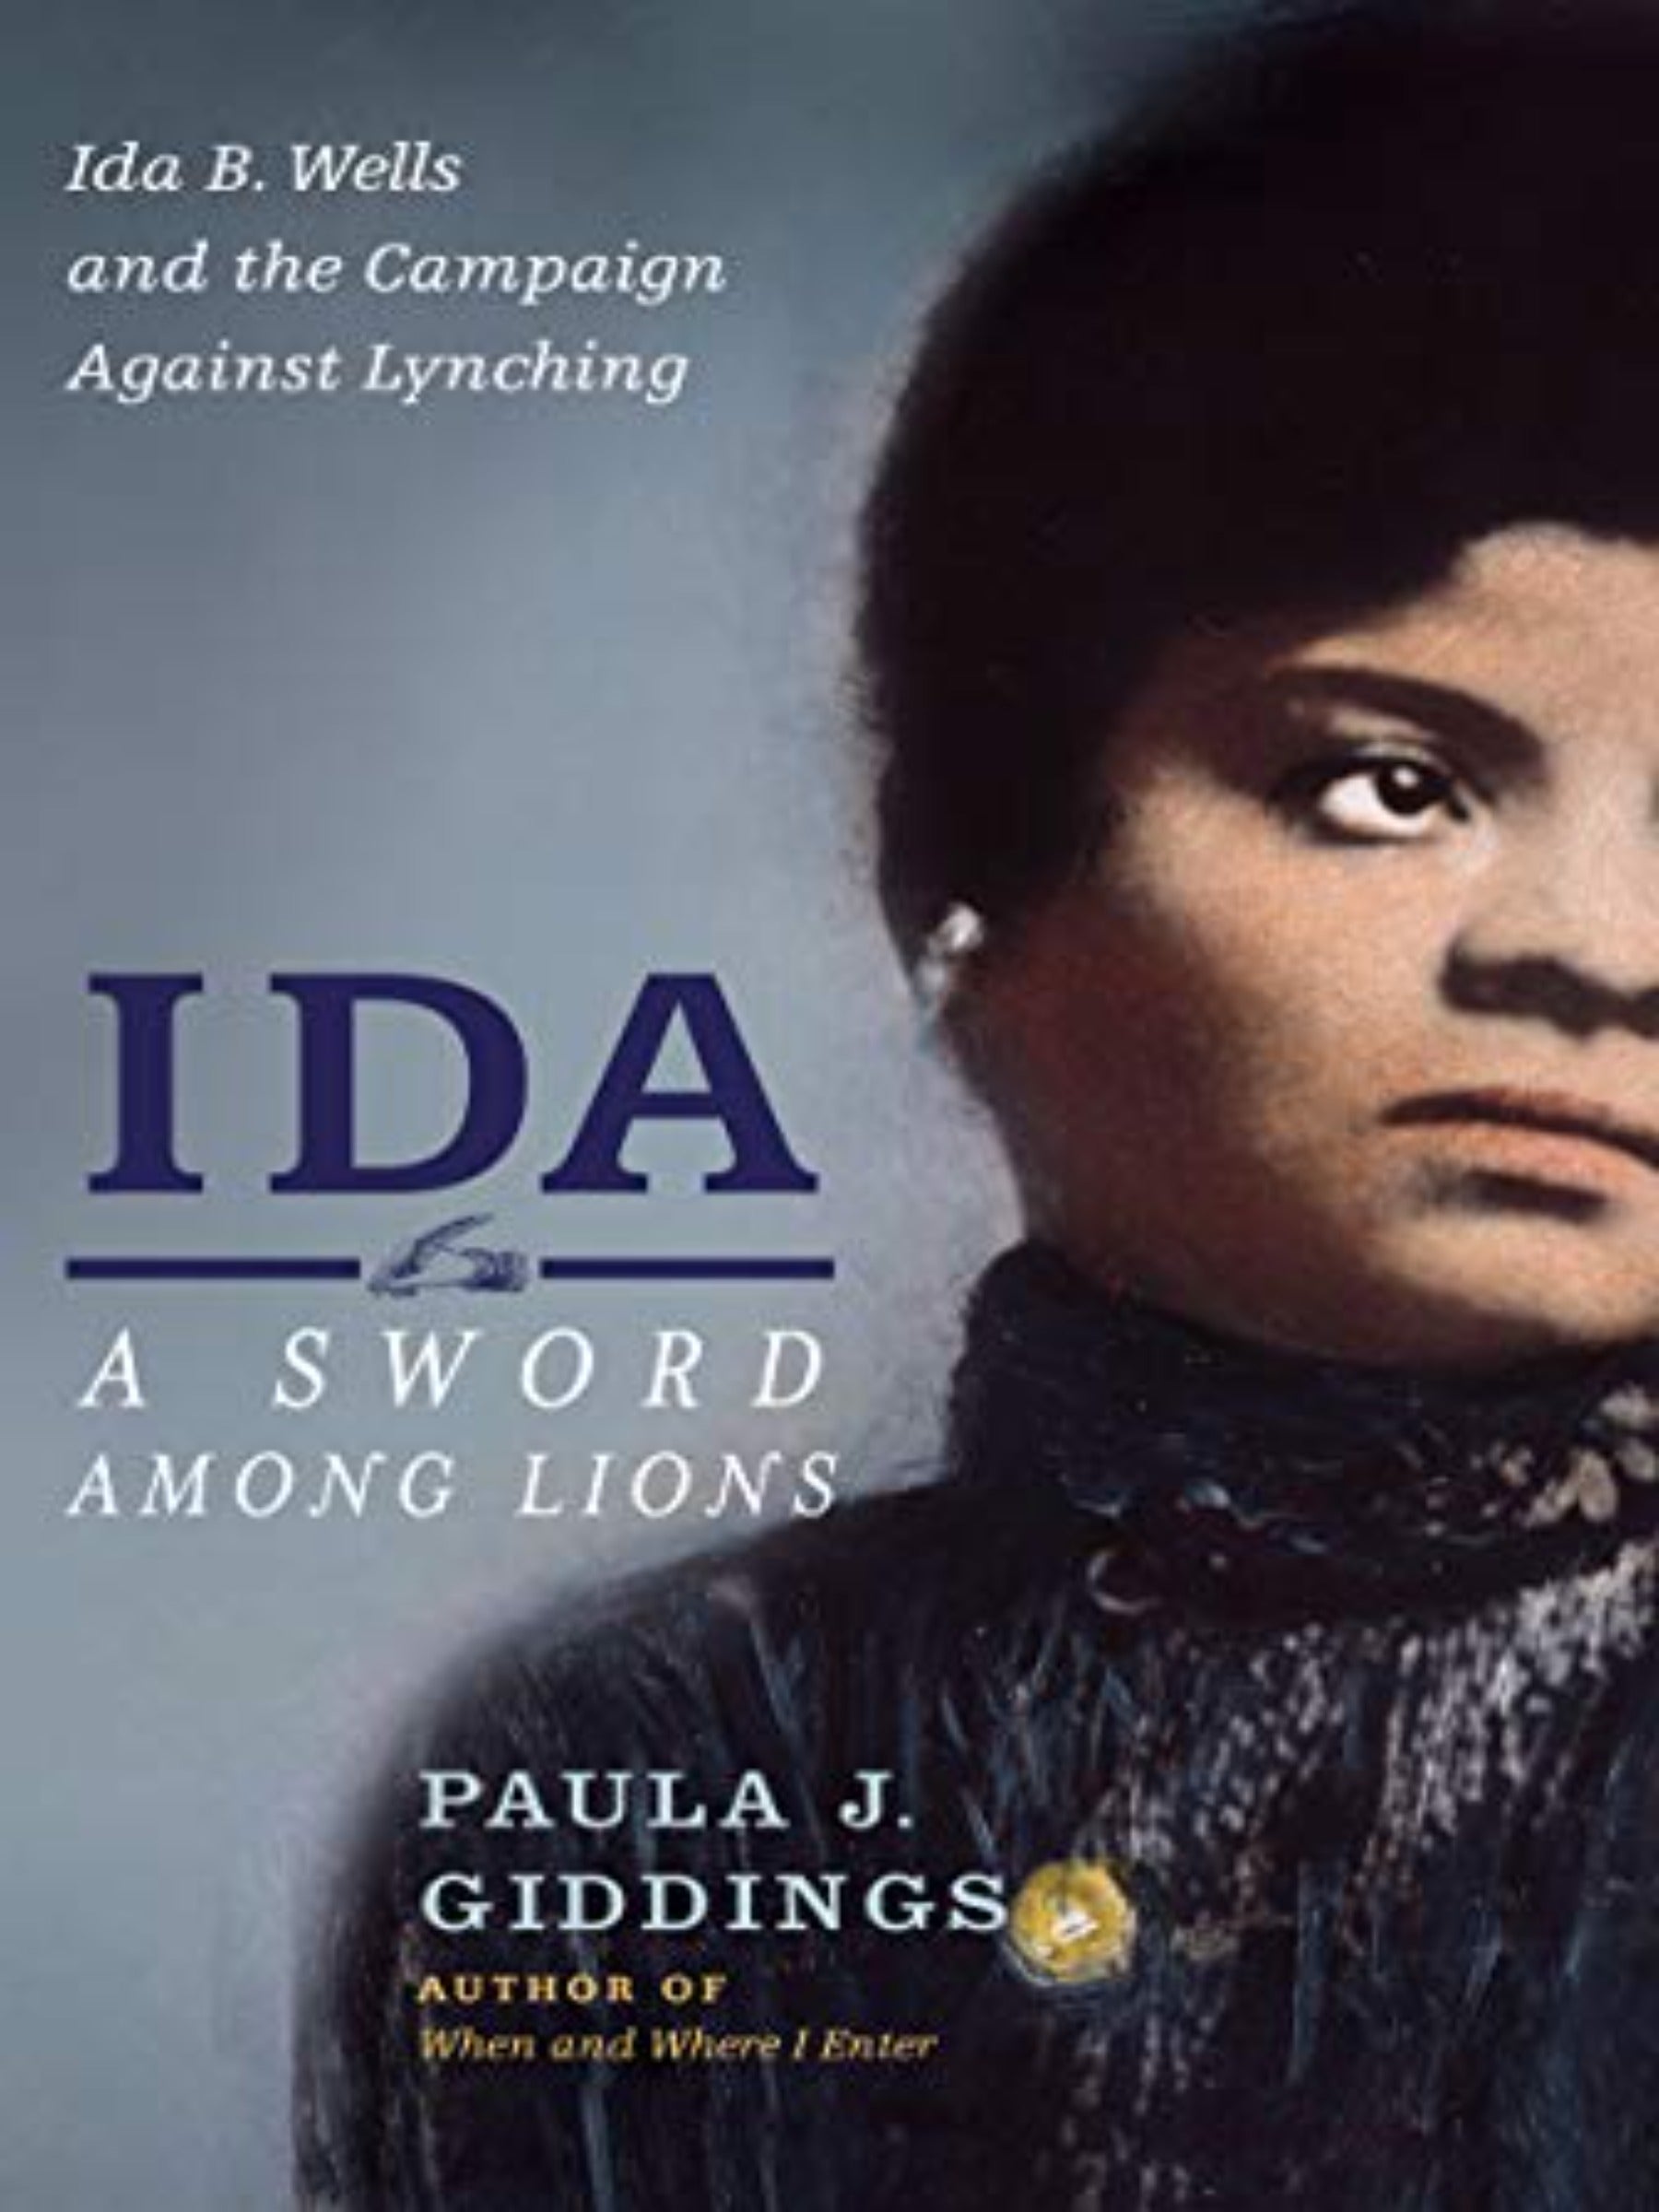 Ida, A Sword Among Lions: Ida B. Wells and the Campaign Against Lynching